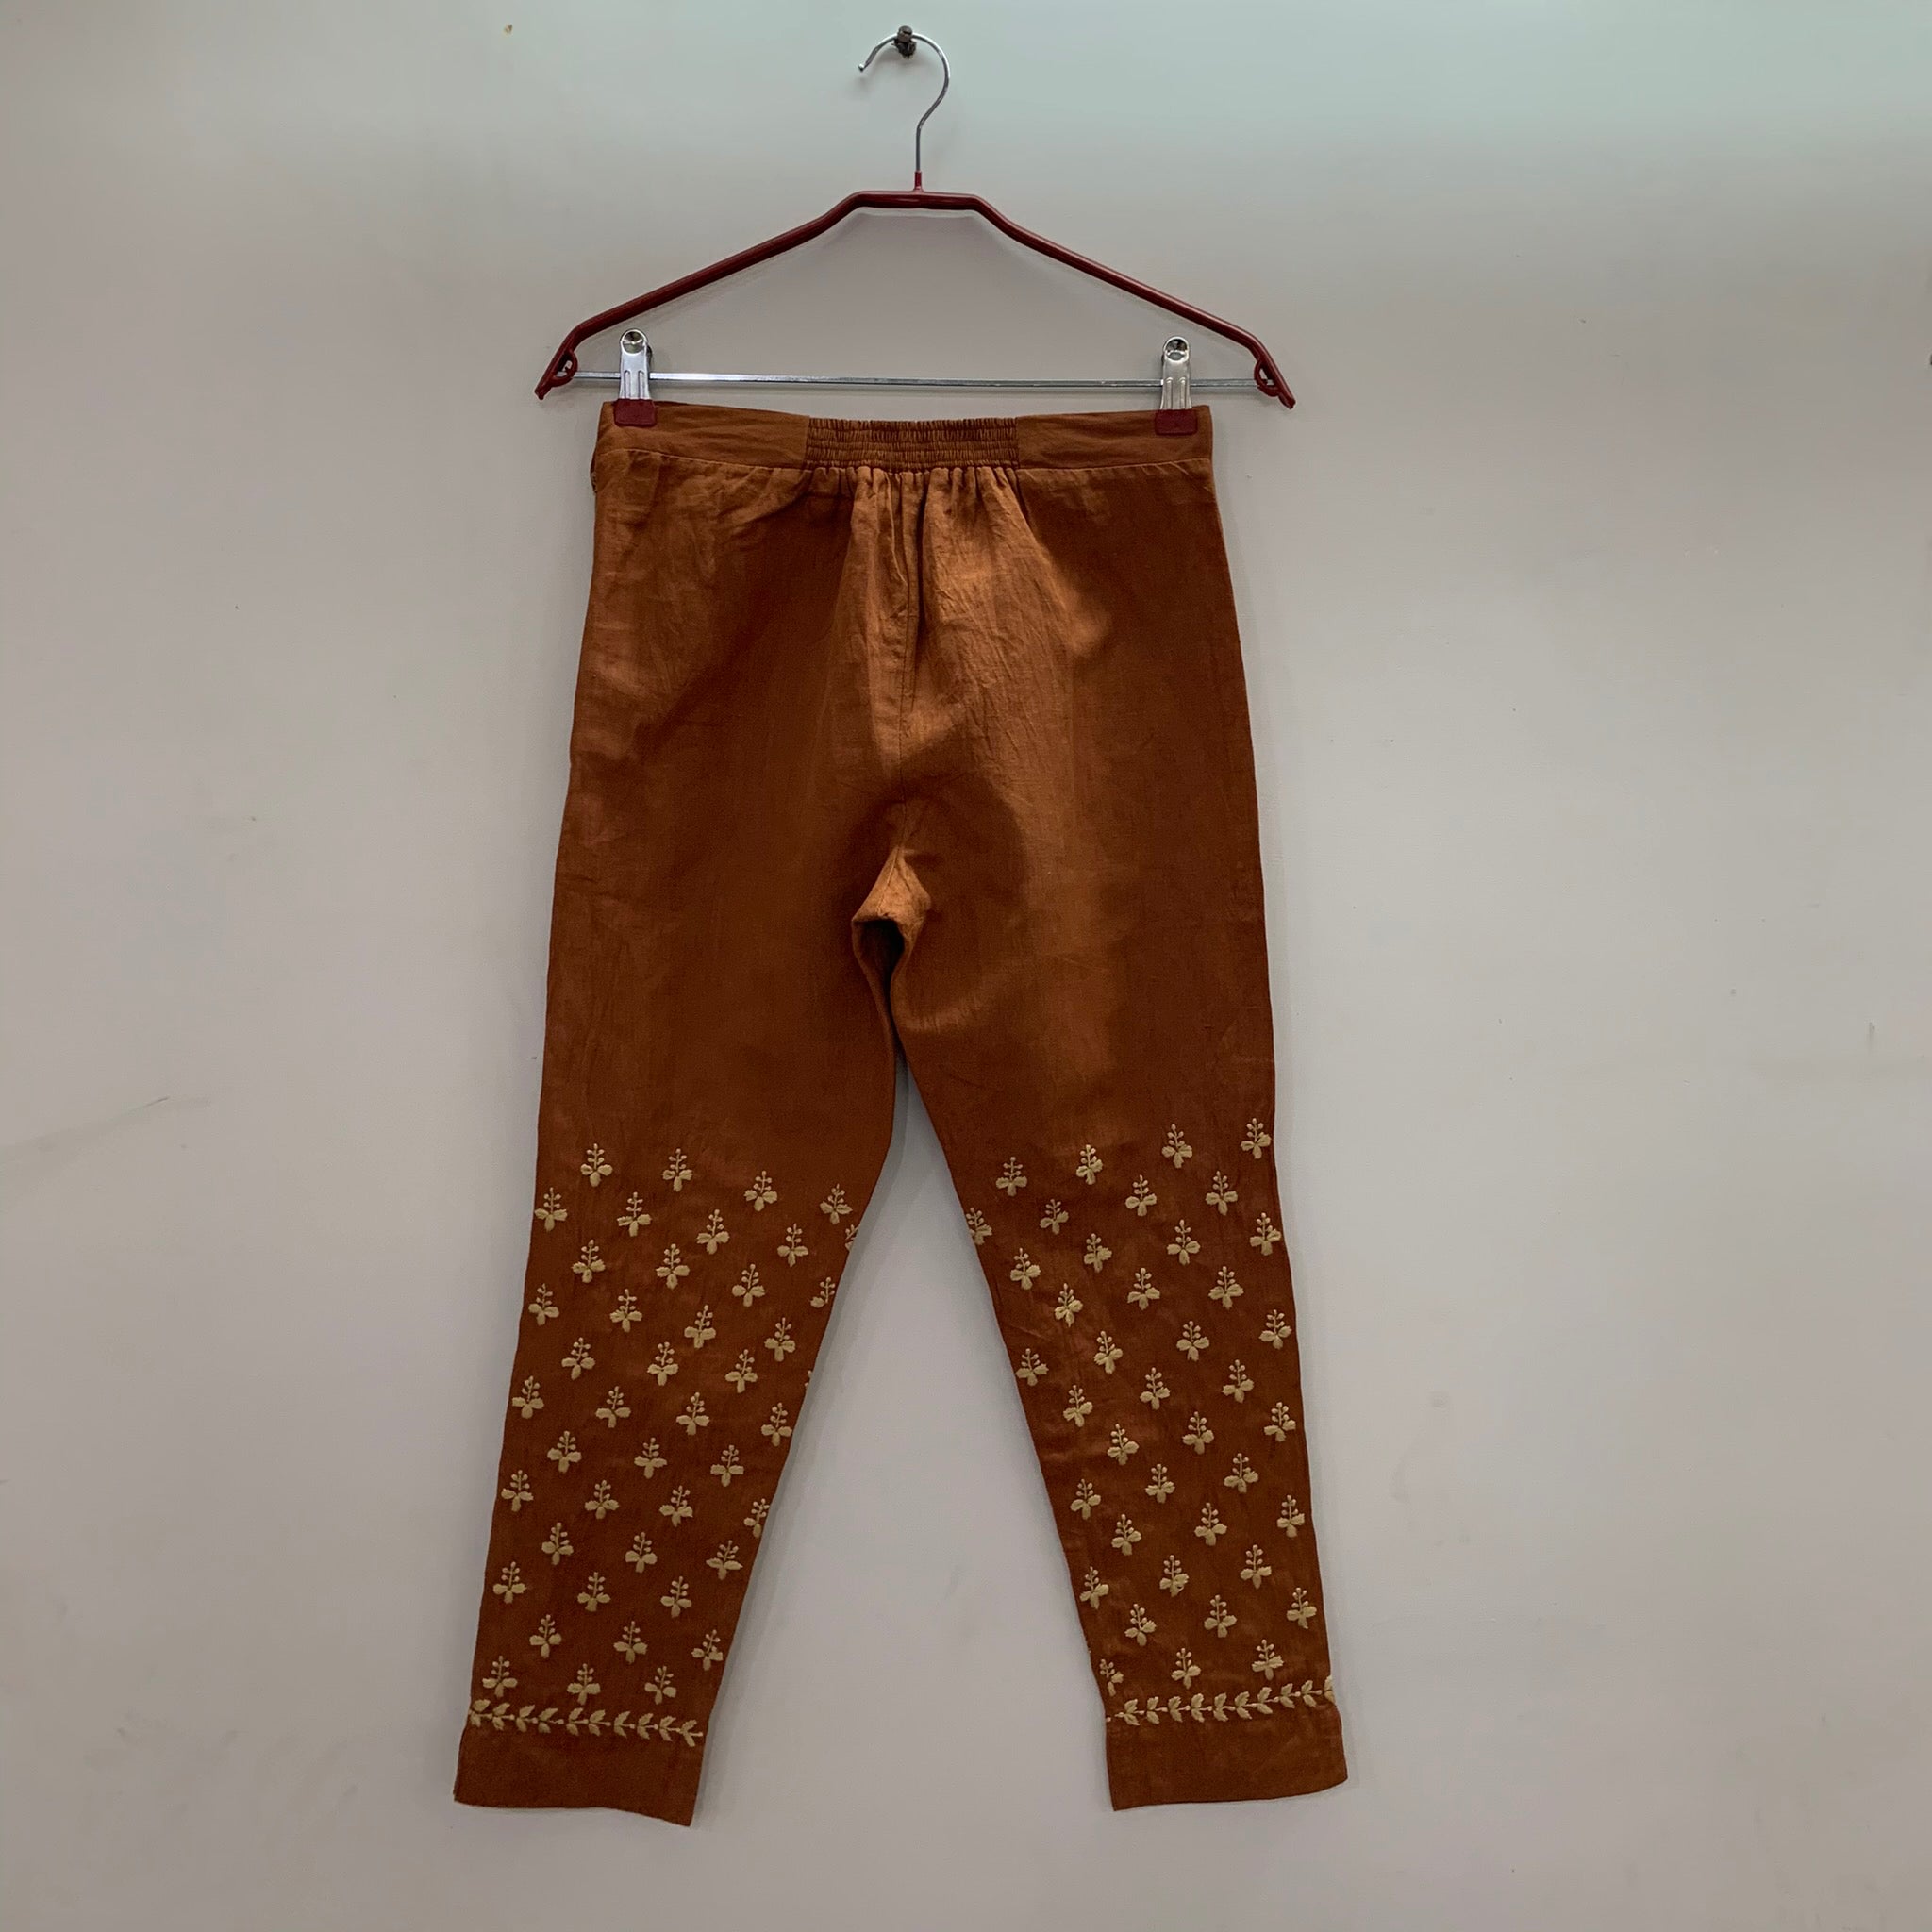 Rust linen pants